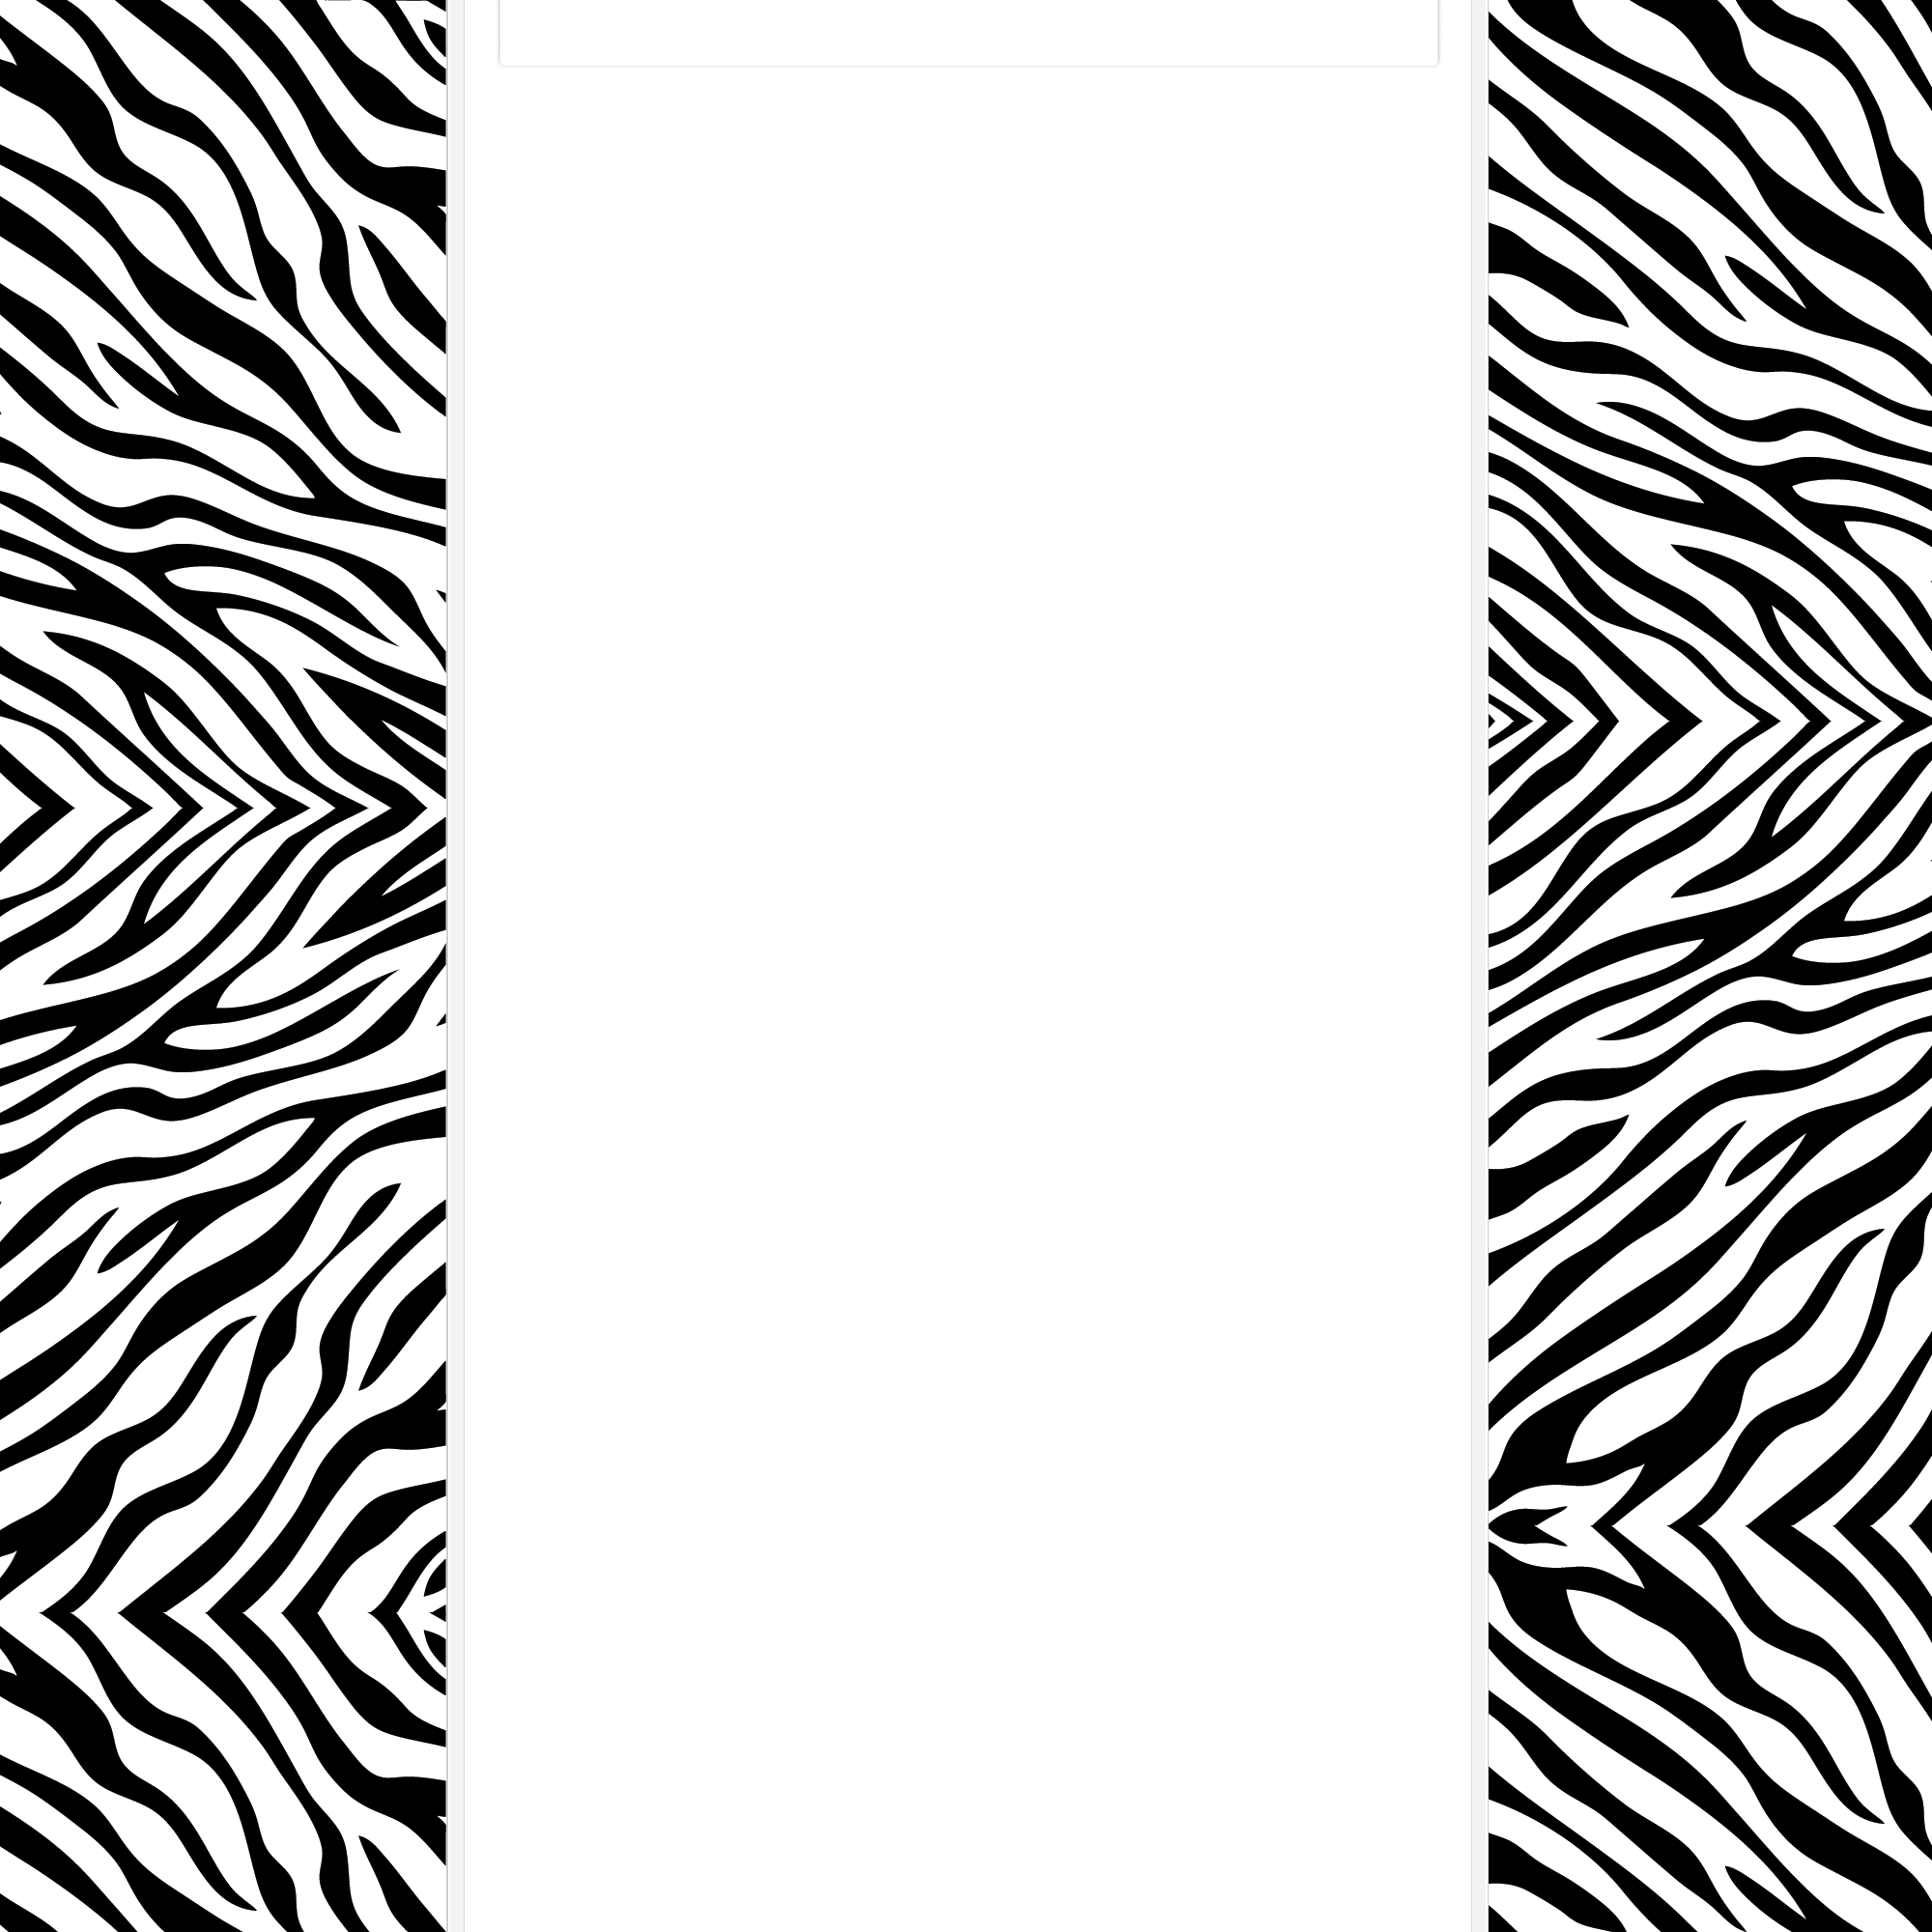 Zebra Background Images - ClipArt Best